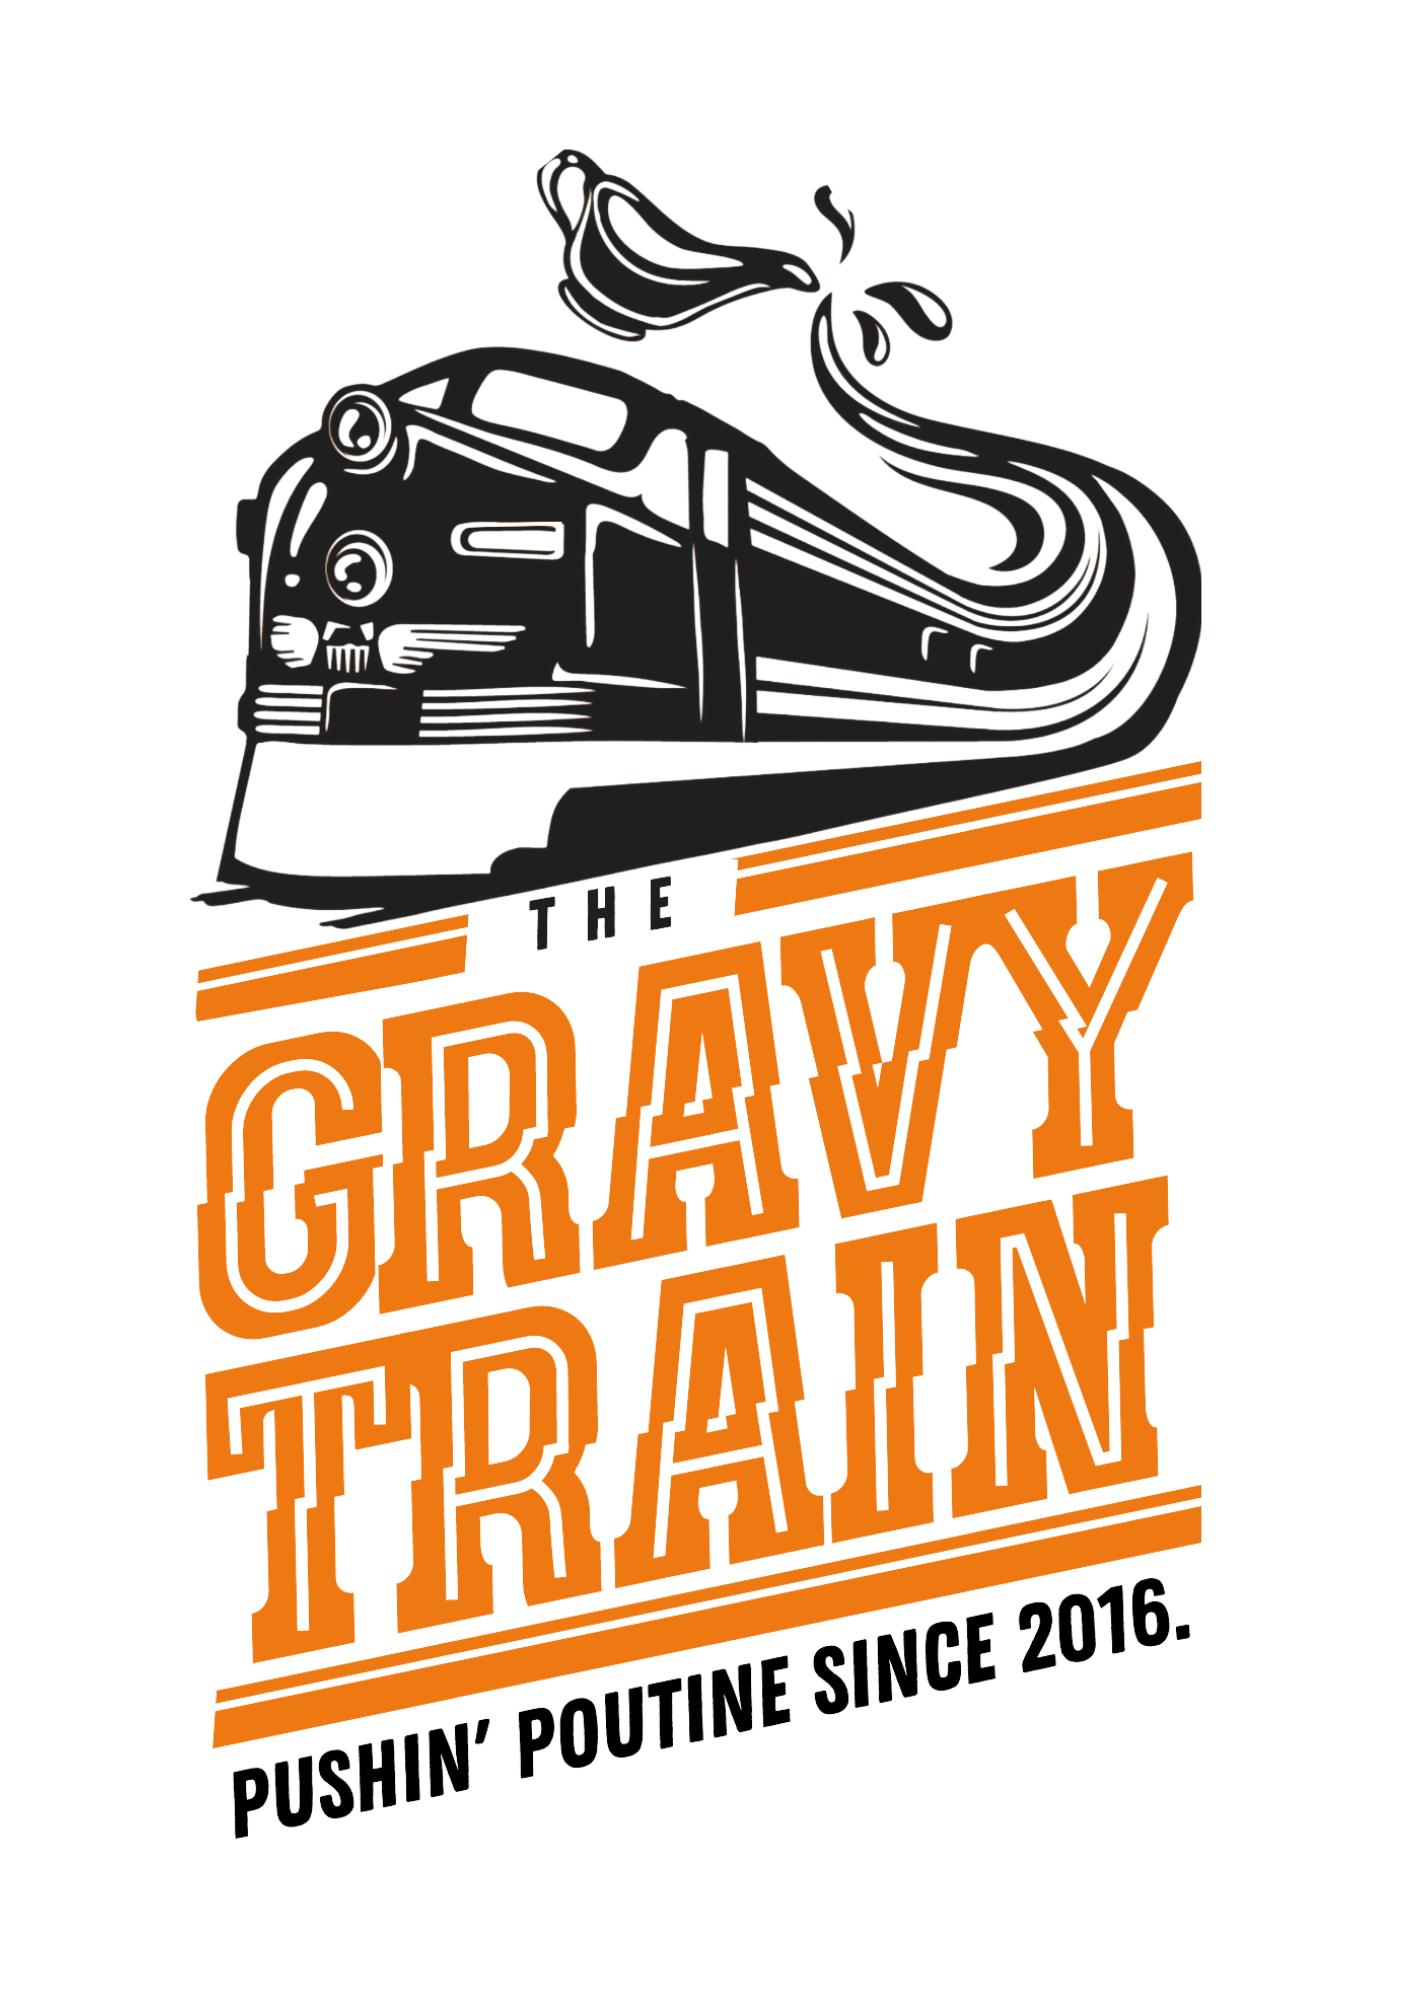 The Gravy Train Poutine